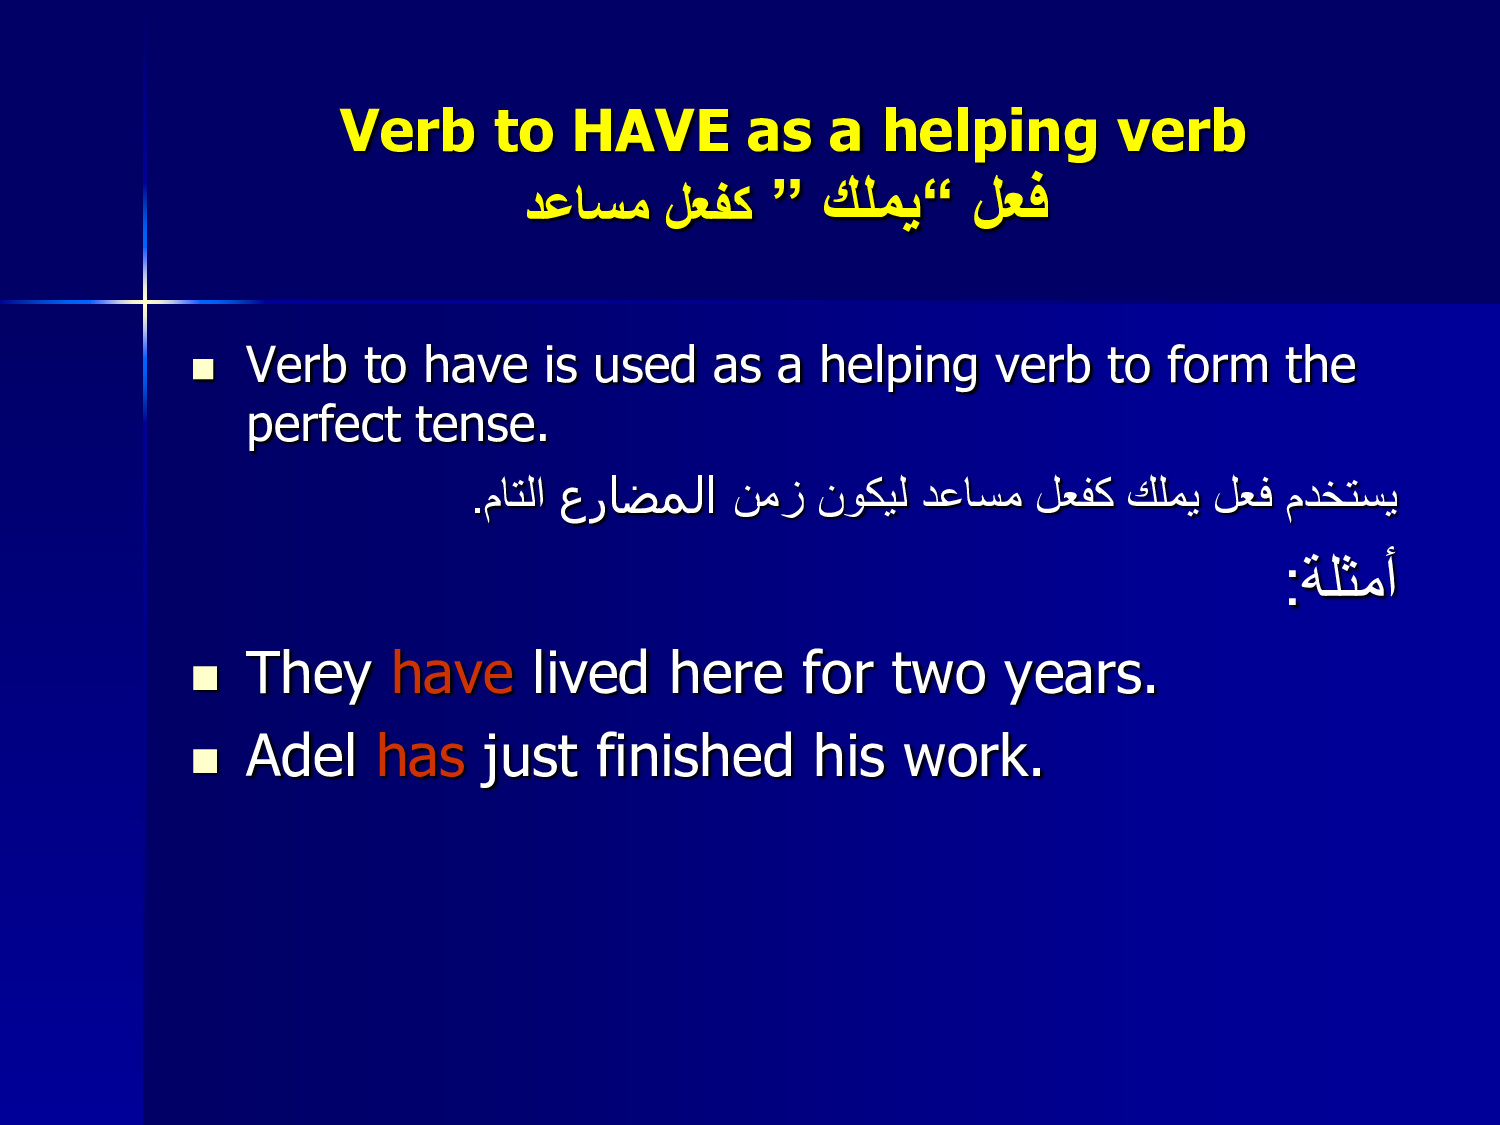 verb-to-have-alloschool